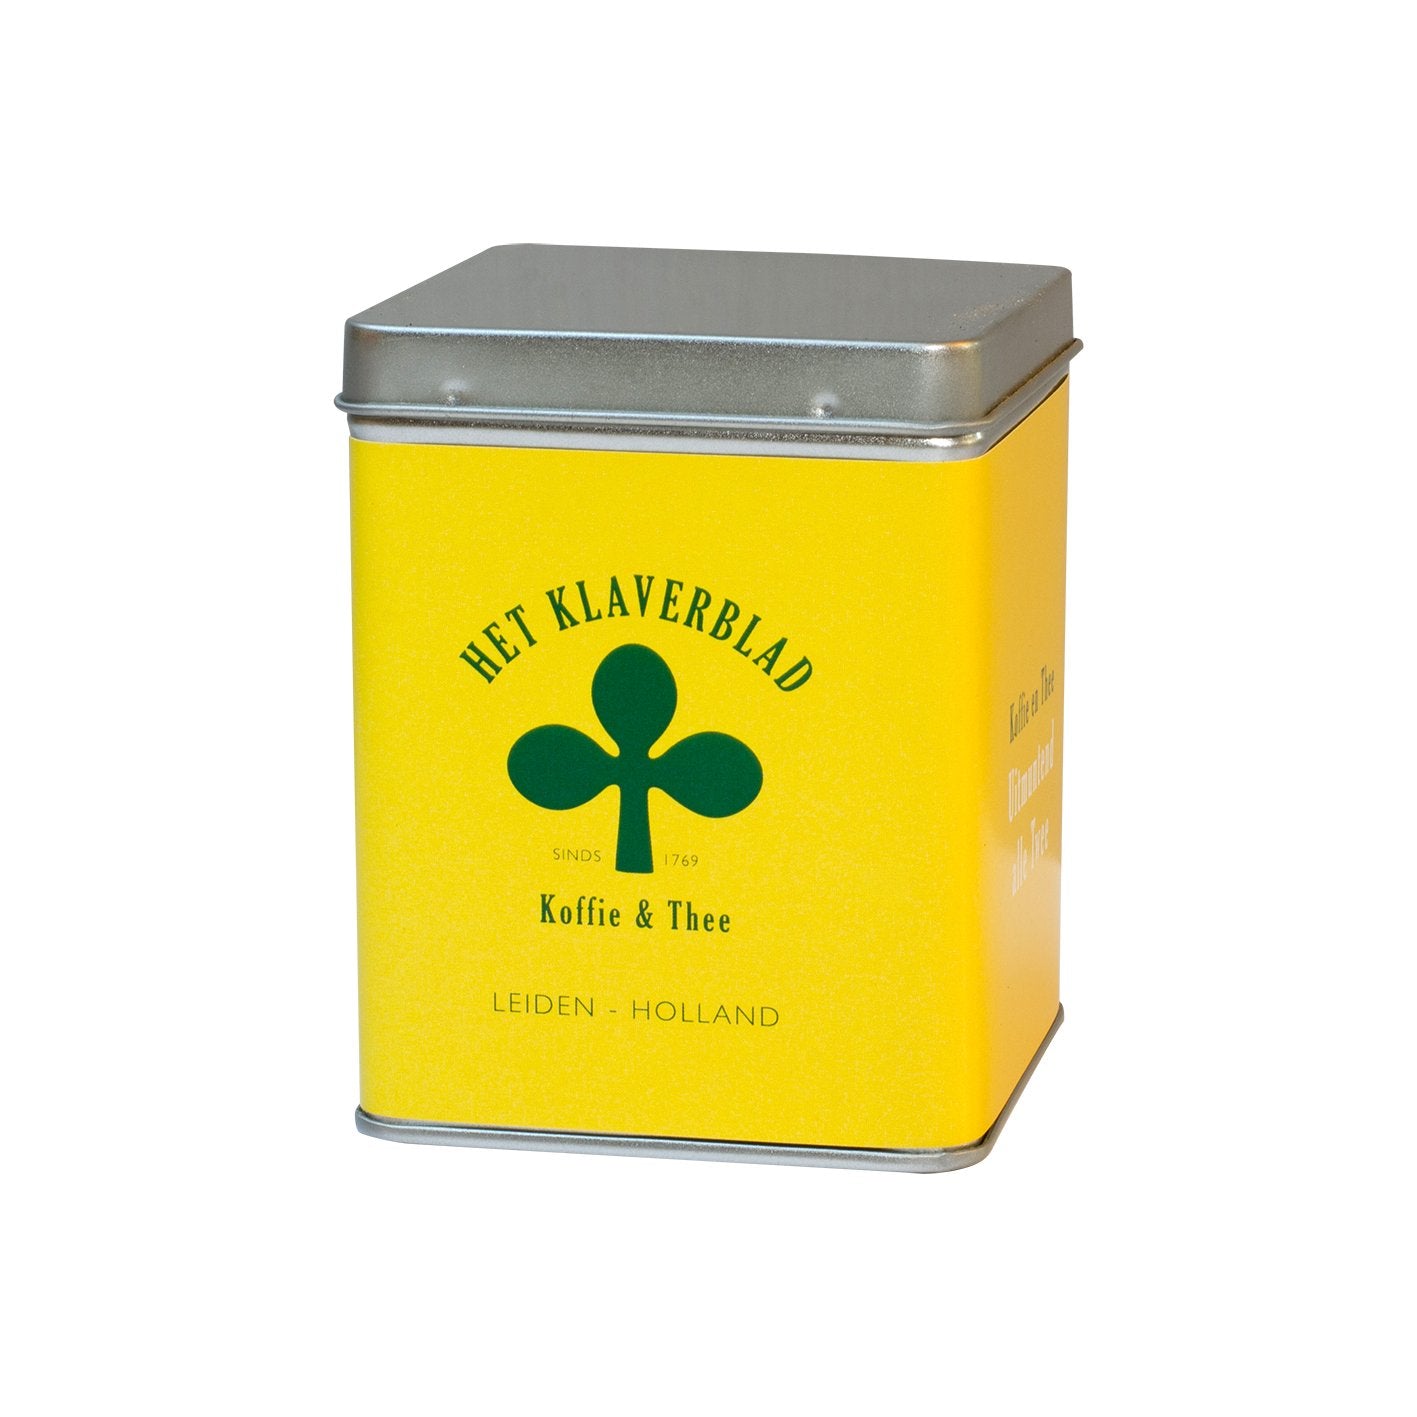 Het Klaverblad 100 g Tea Tin Yellow